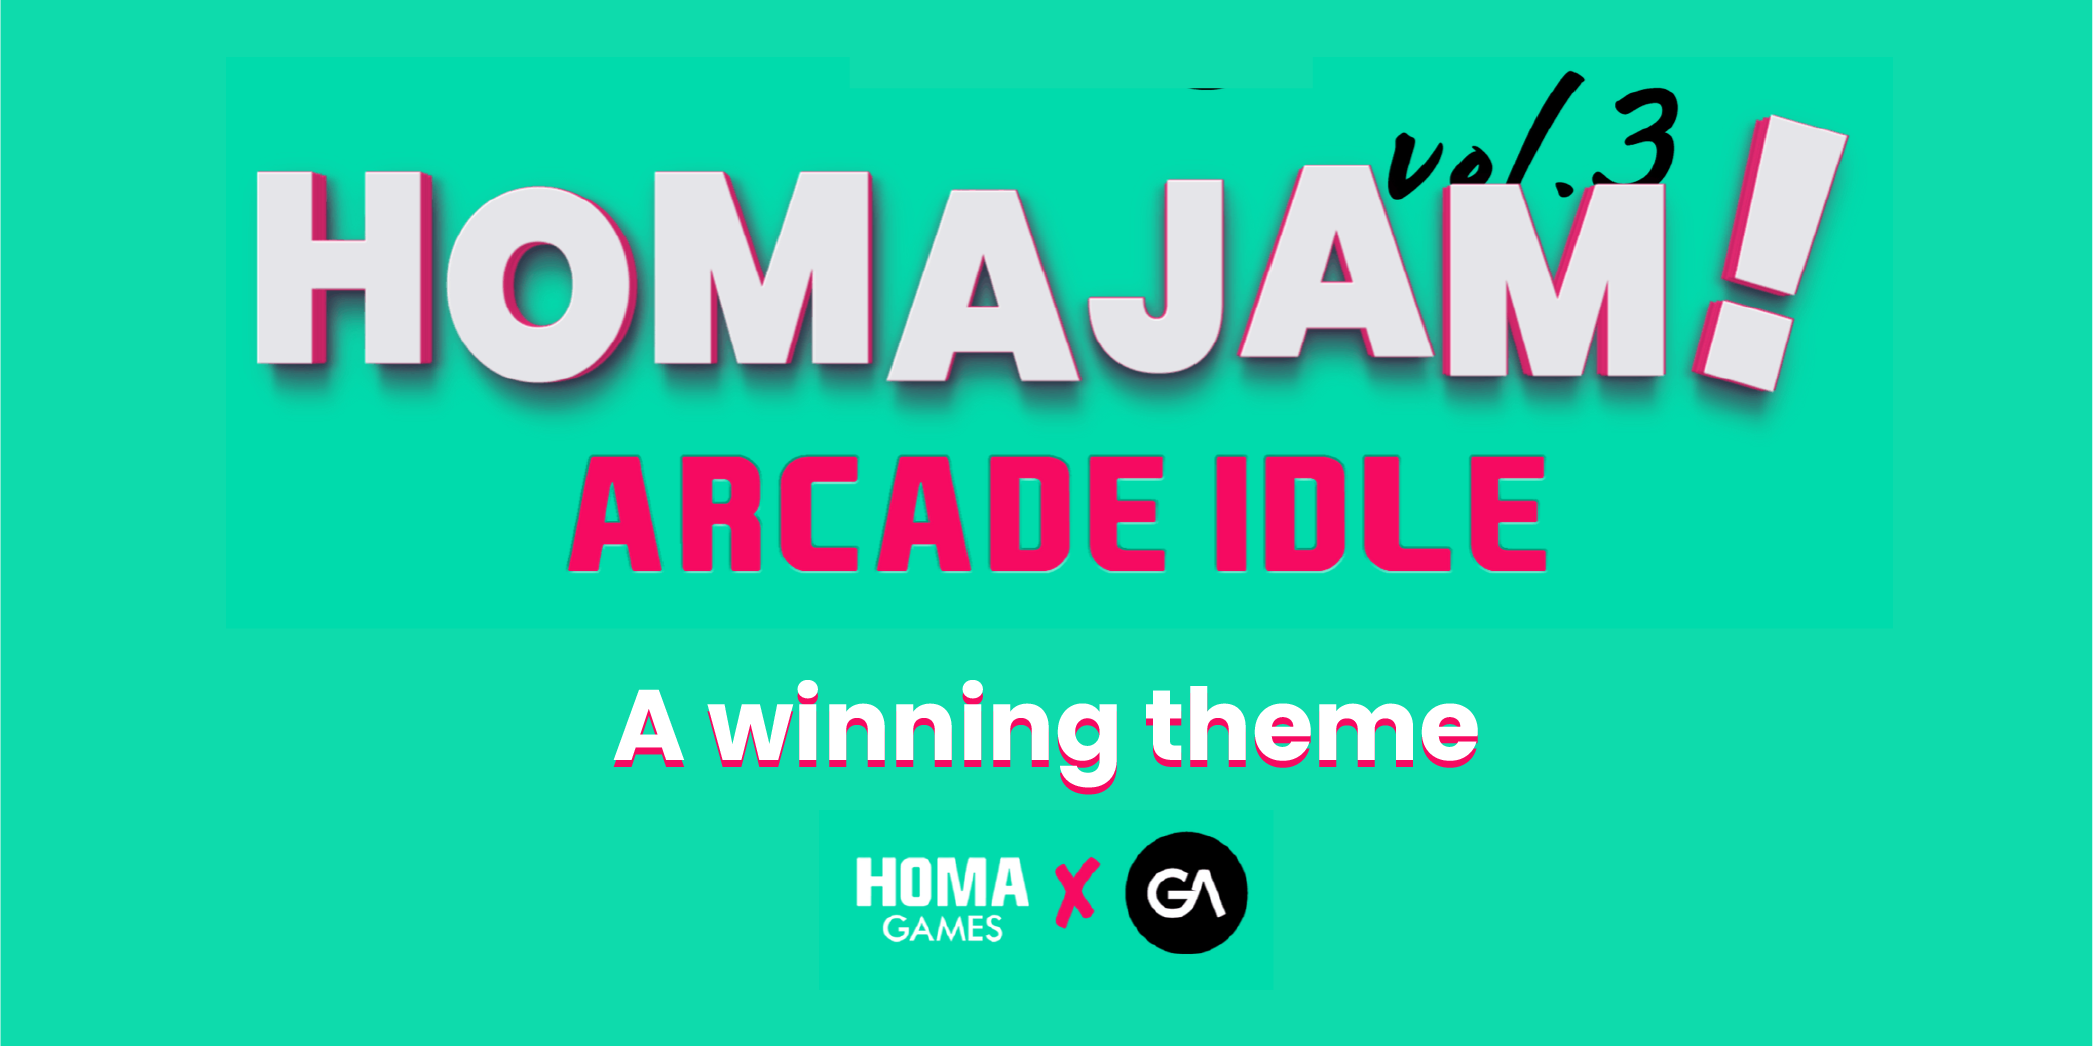 Arcade Idle theme winner at HomaJam